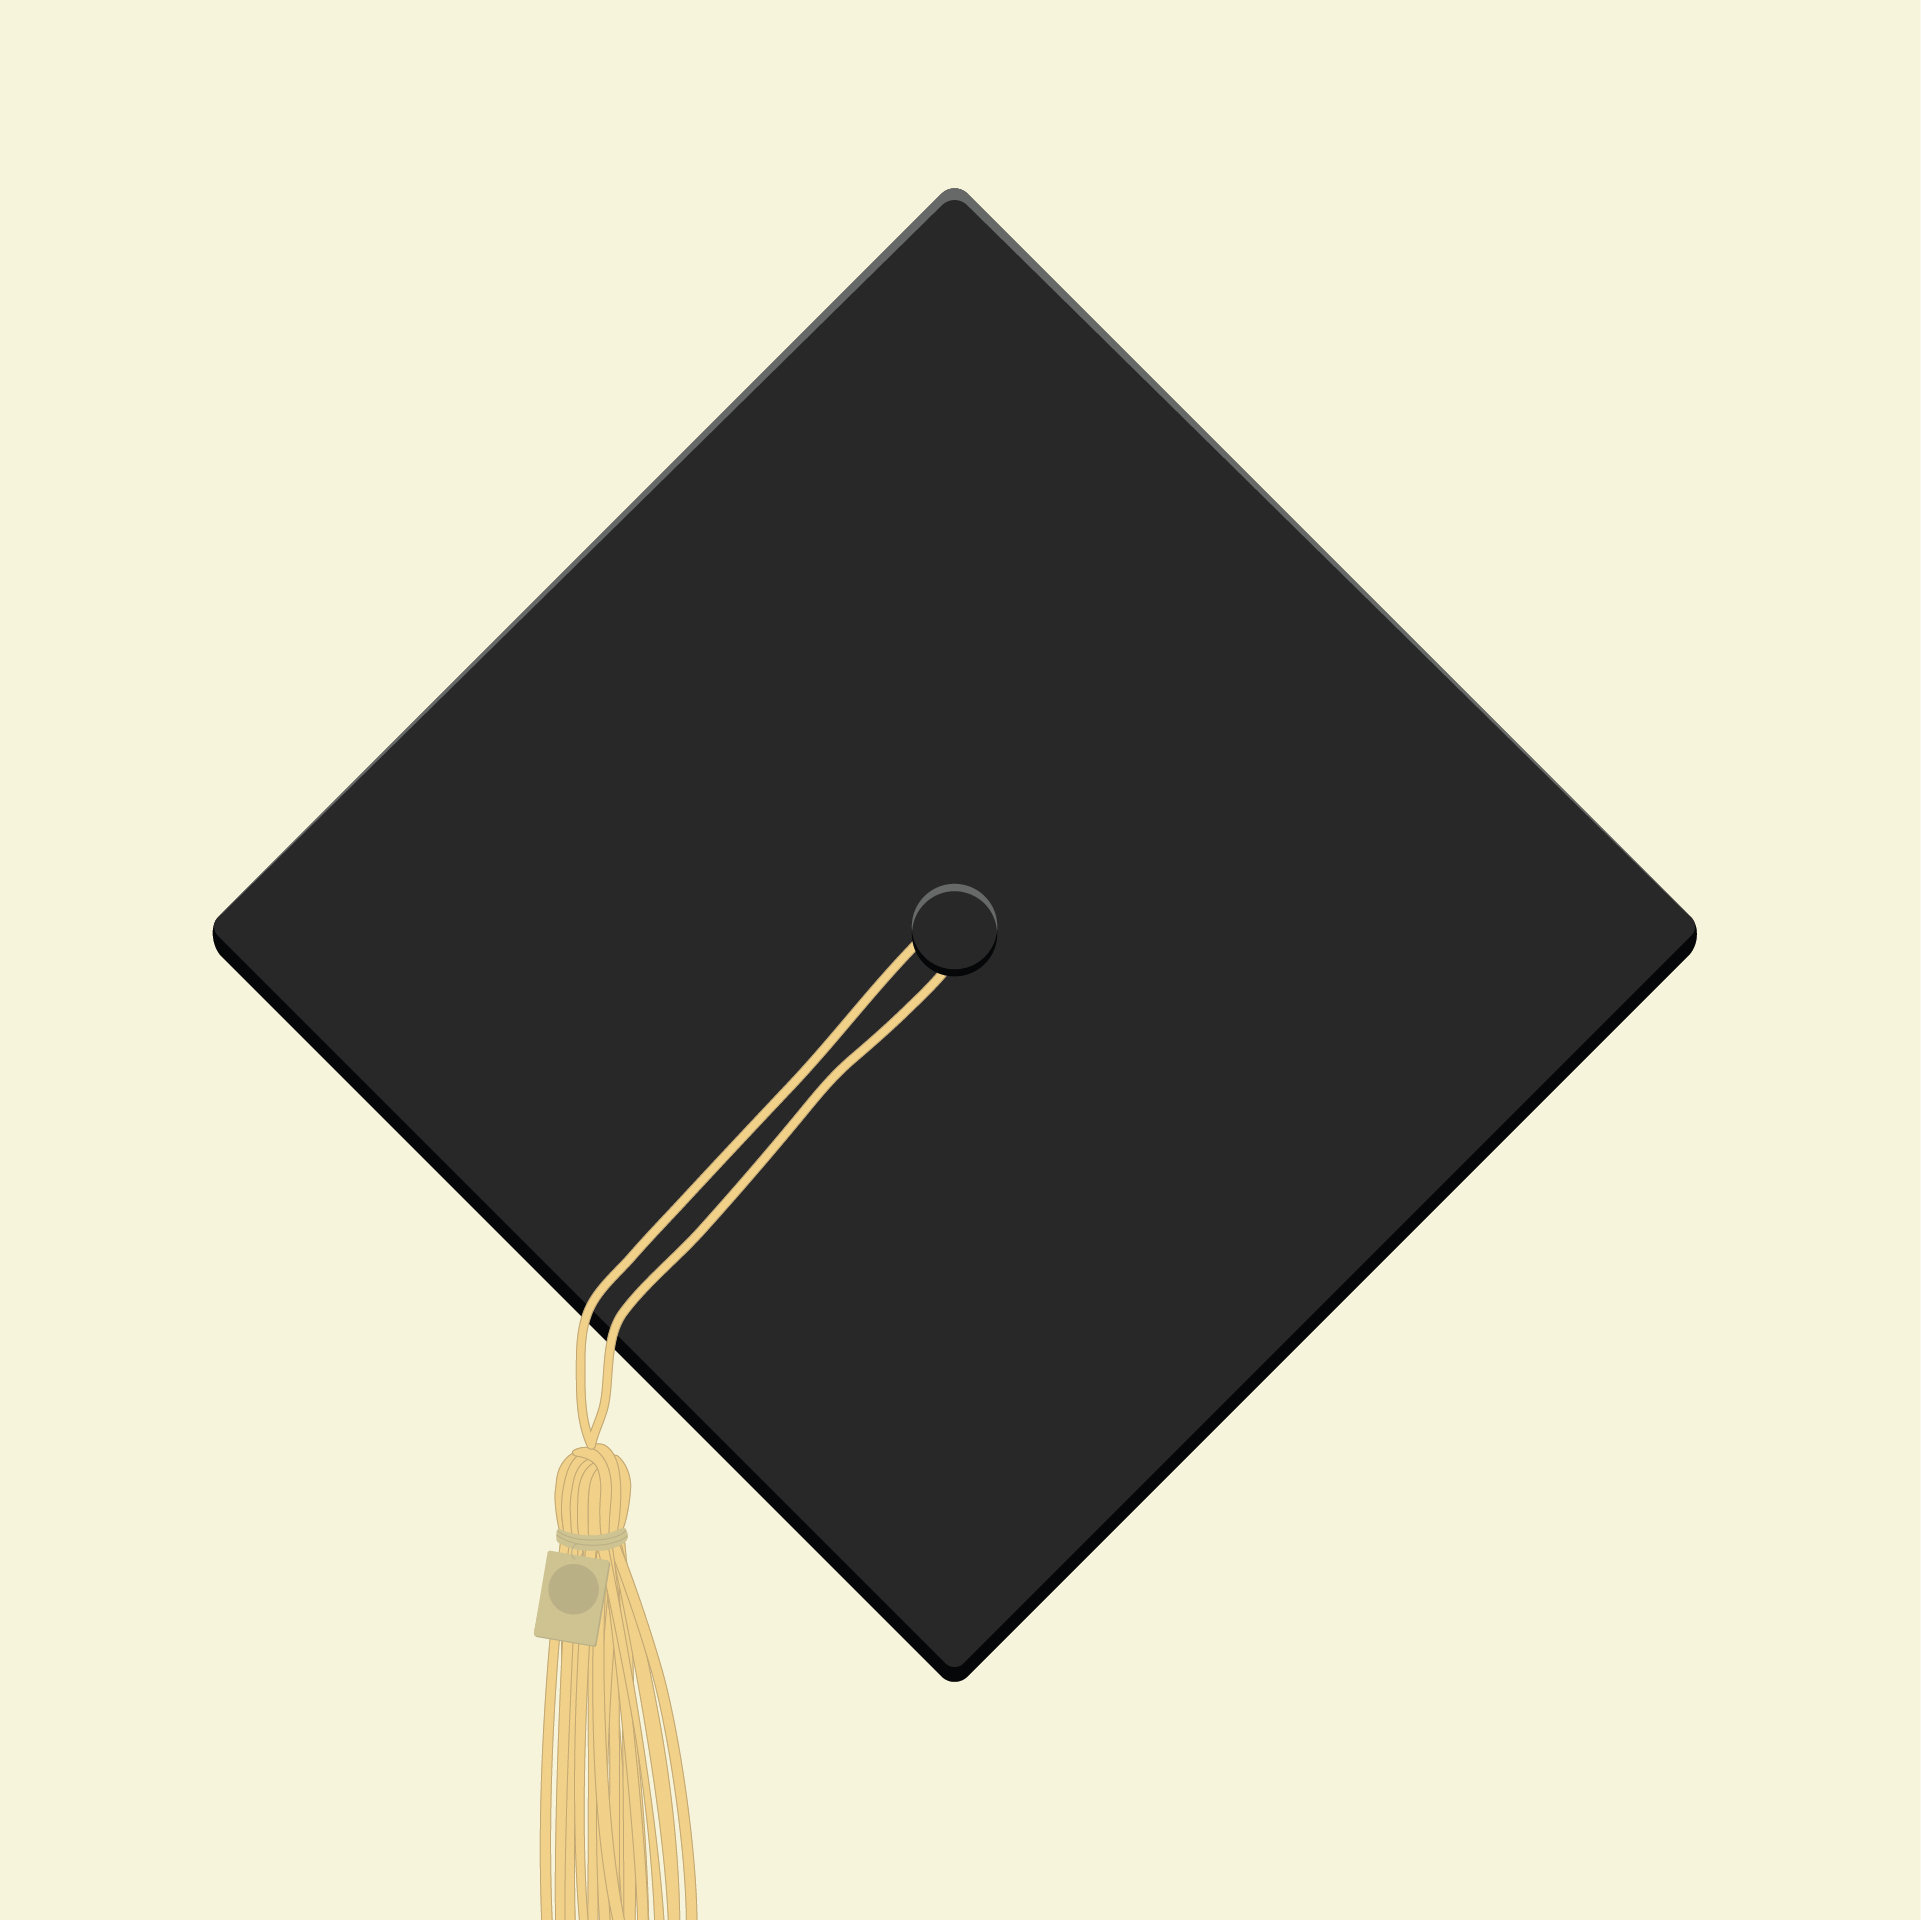 Top of a black graduation cap with a gold tassle